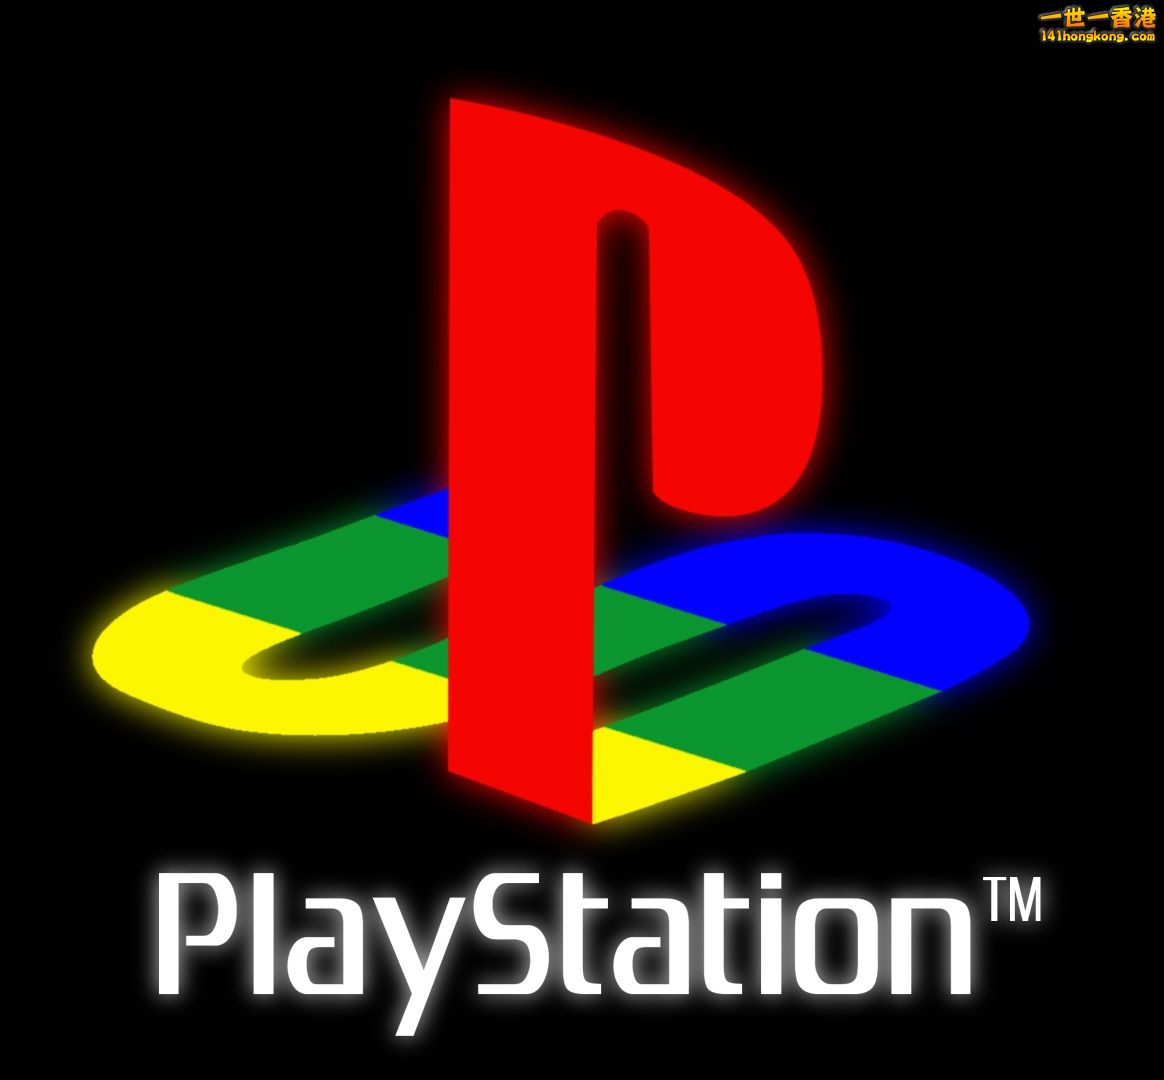 sony_playstation_logo.jpg